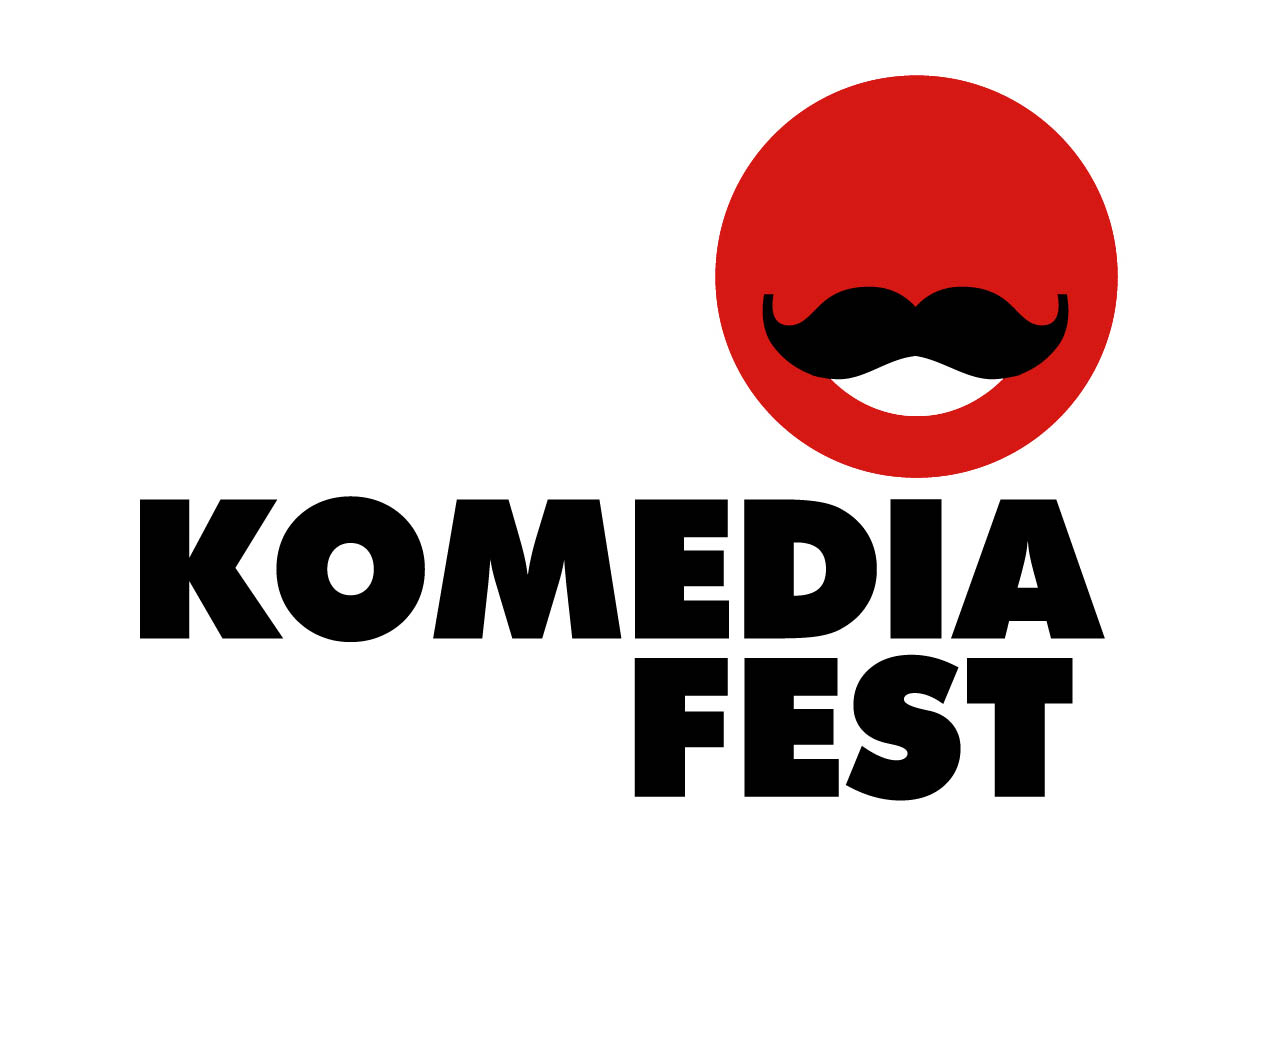 Visual identity for Komedia Fest